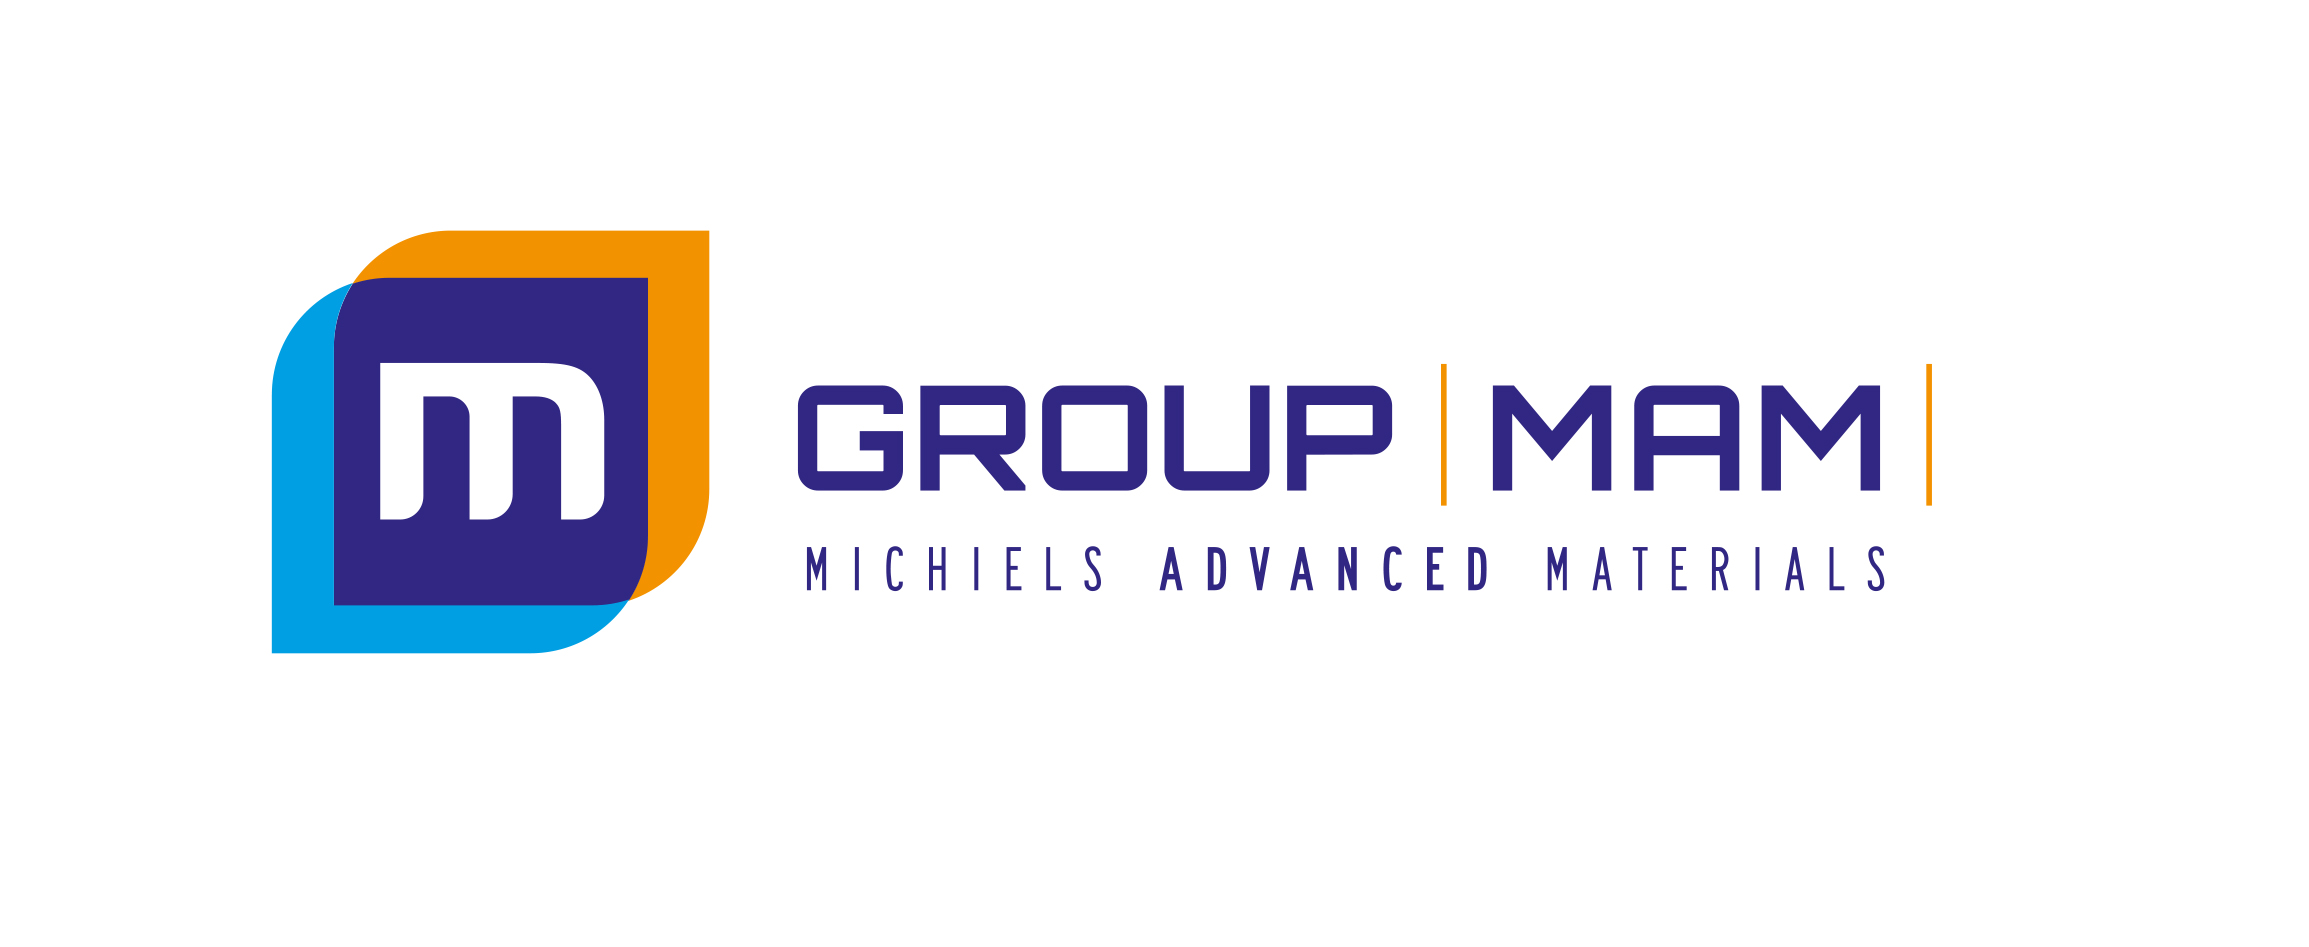 Group Michiels Advanced Materials